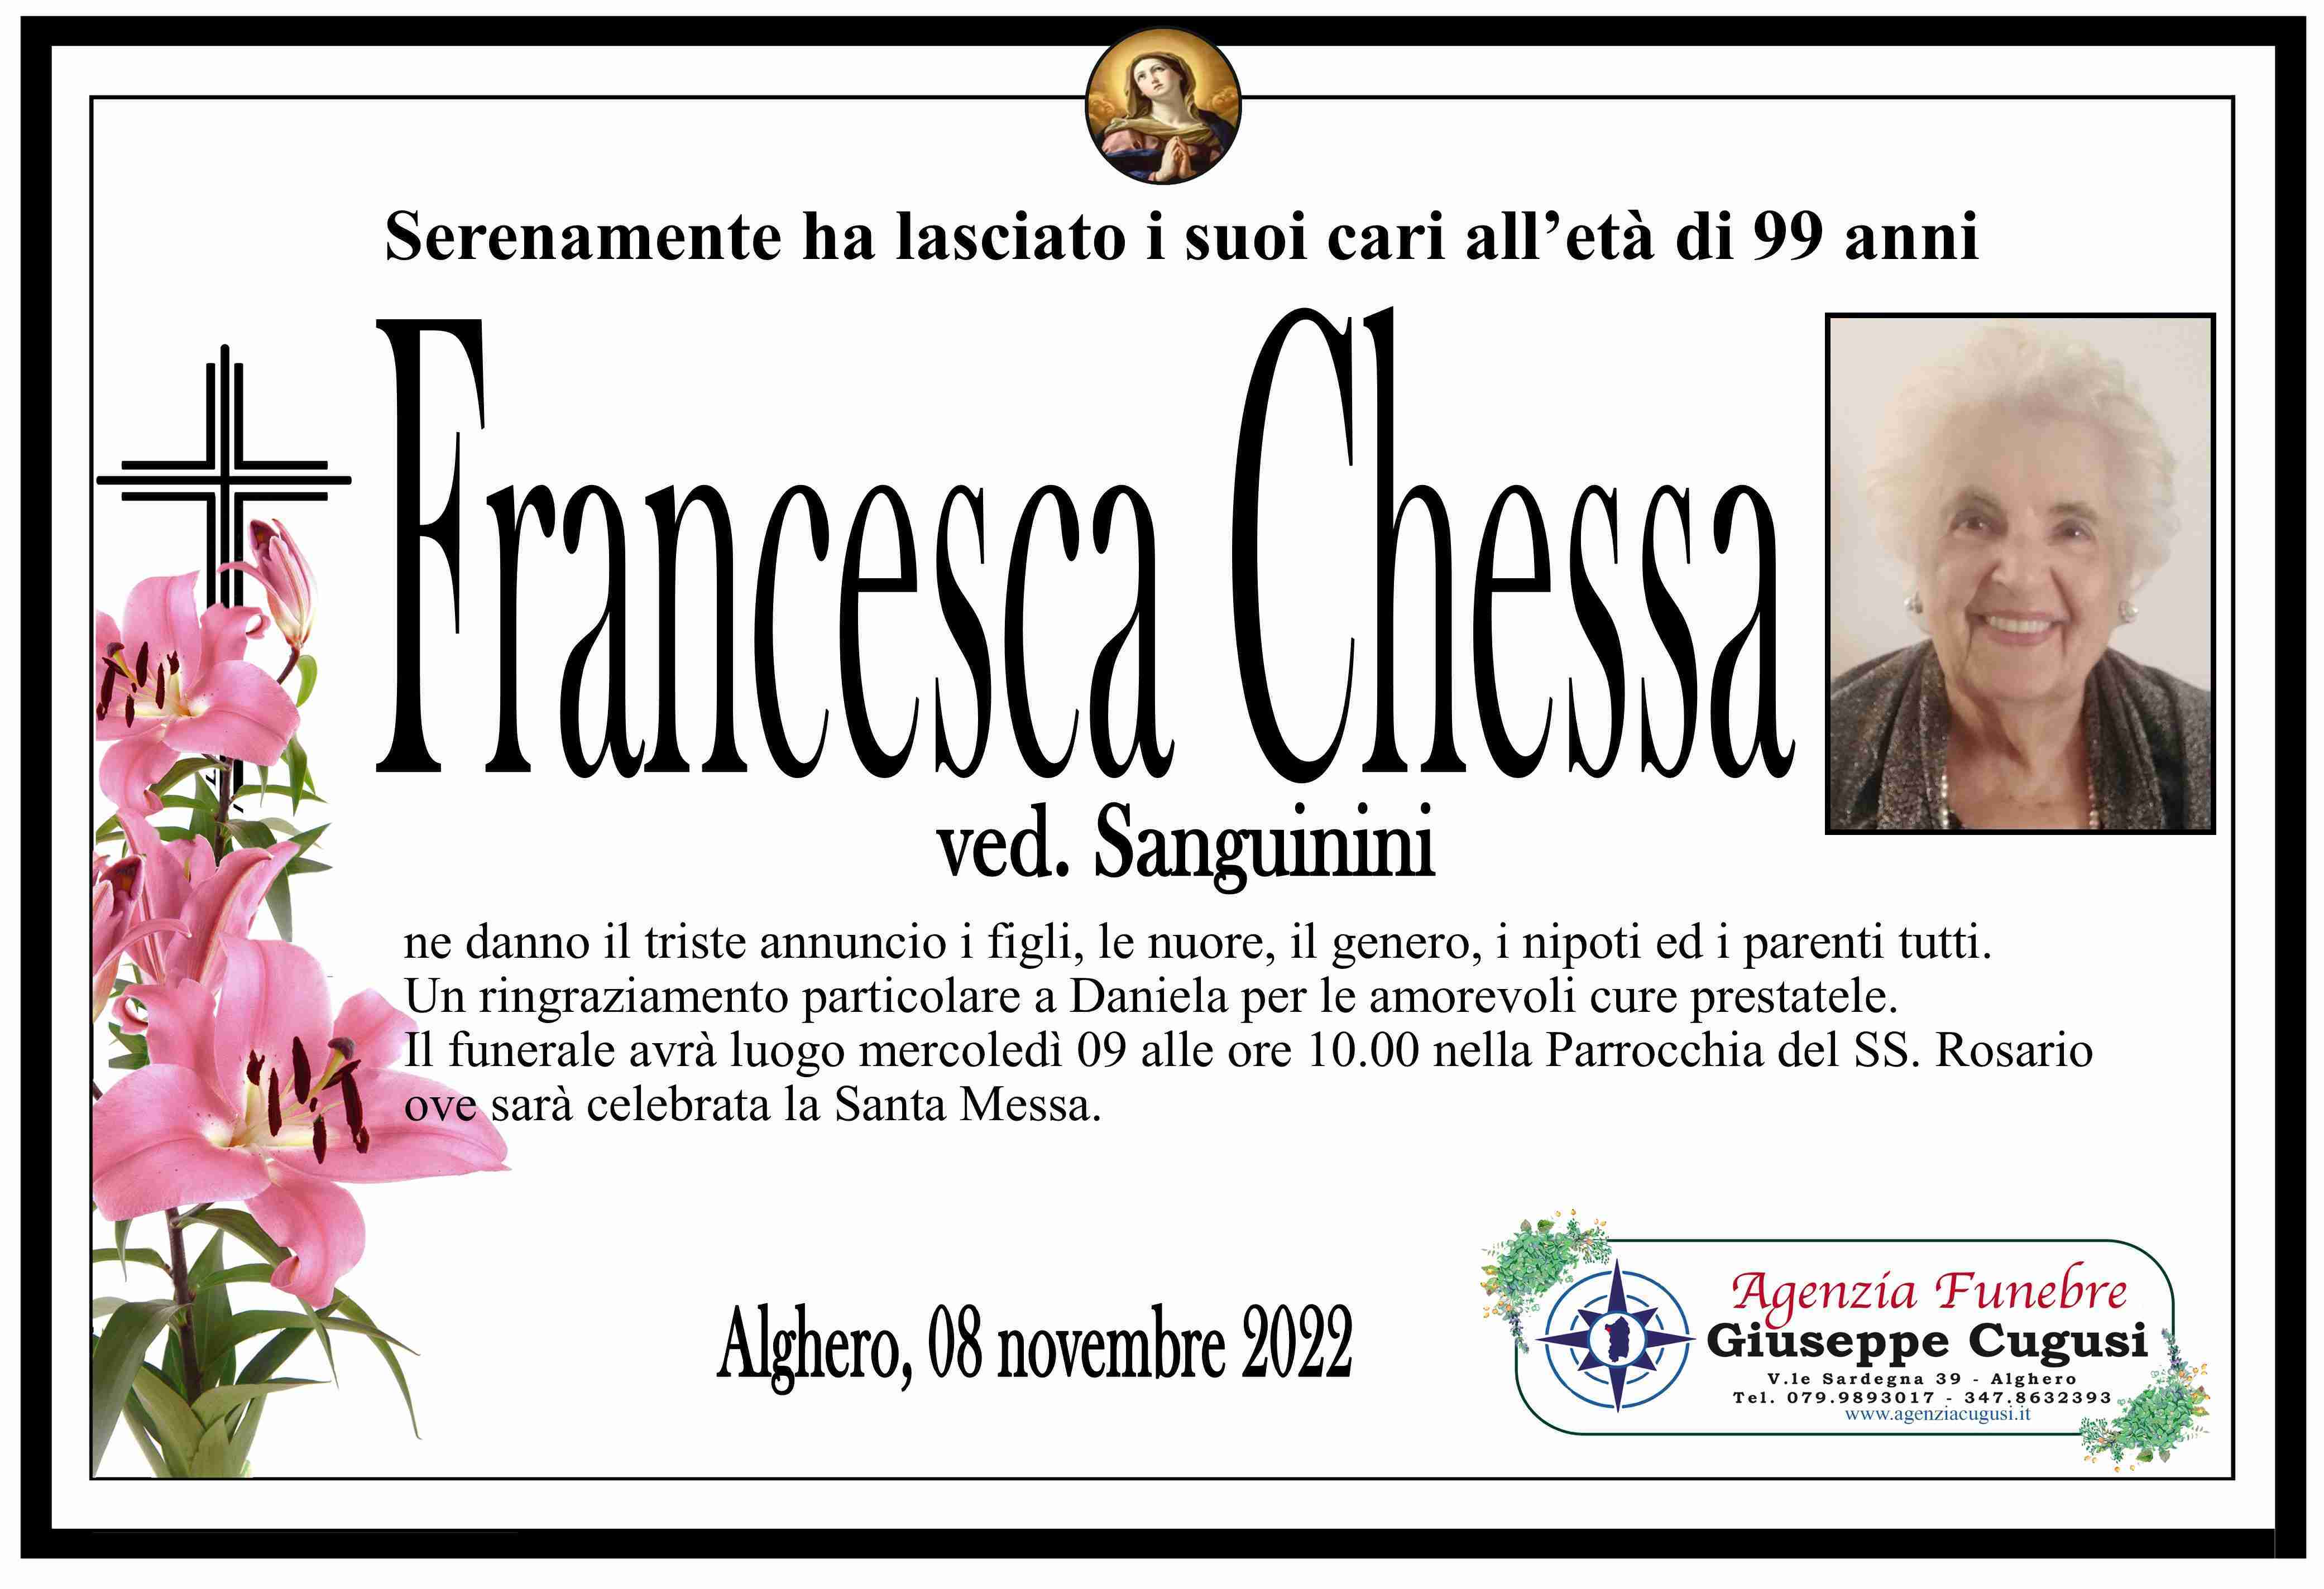 Francesca Chessa